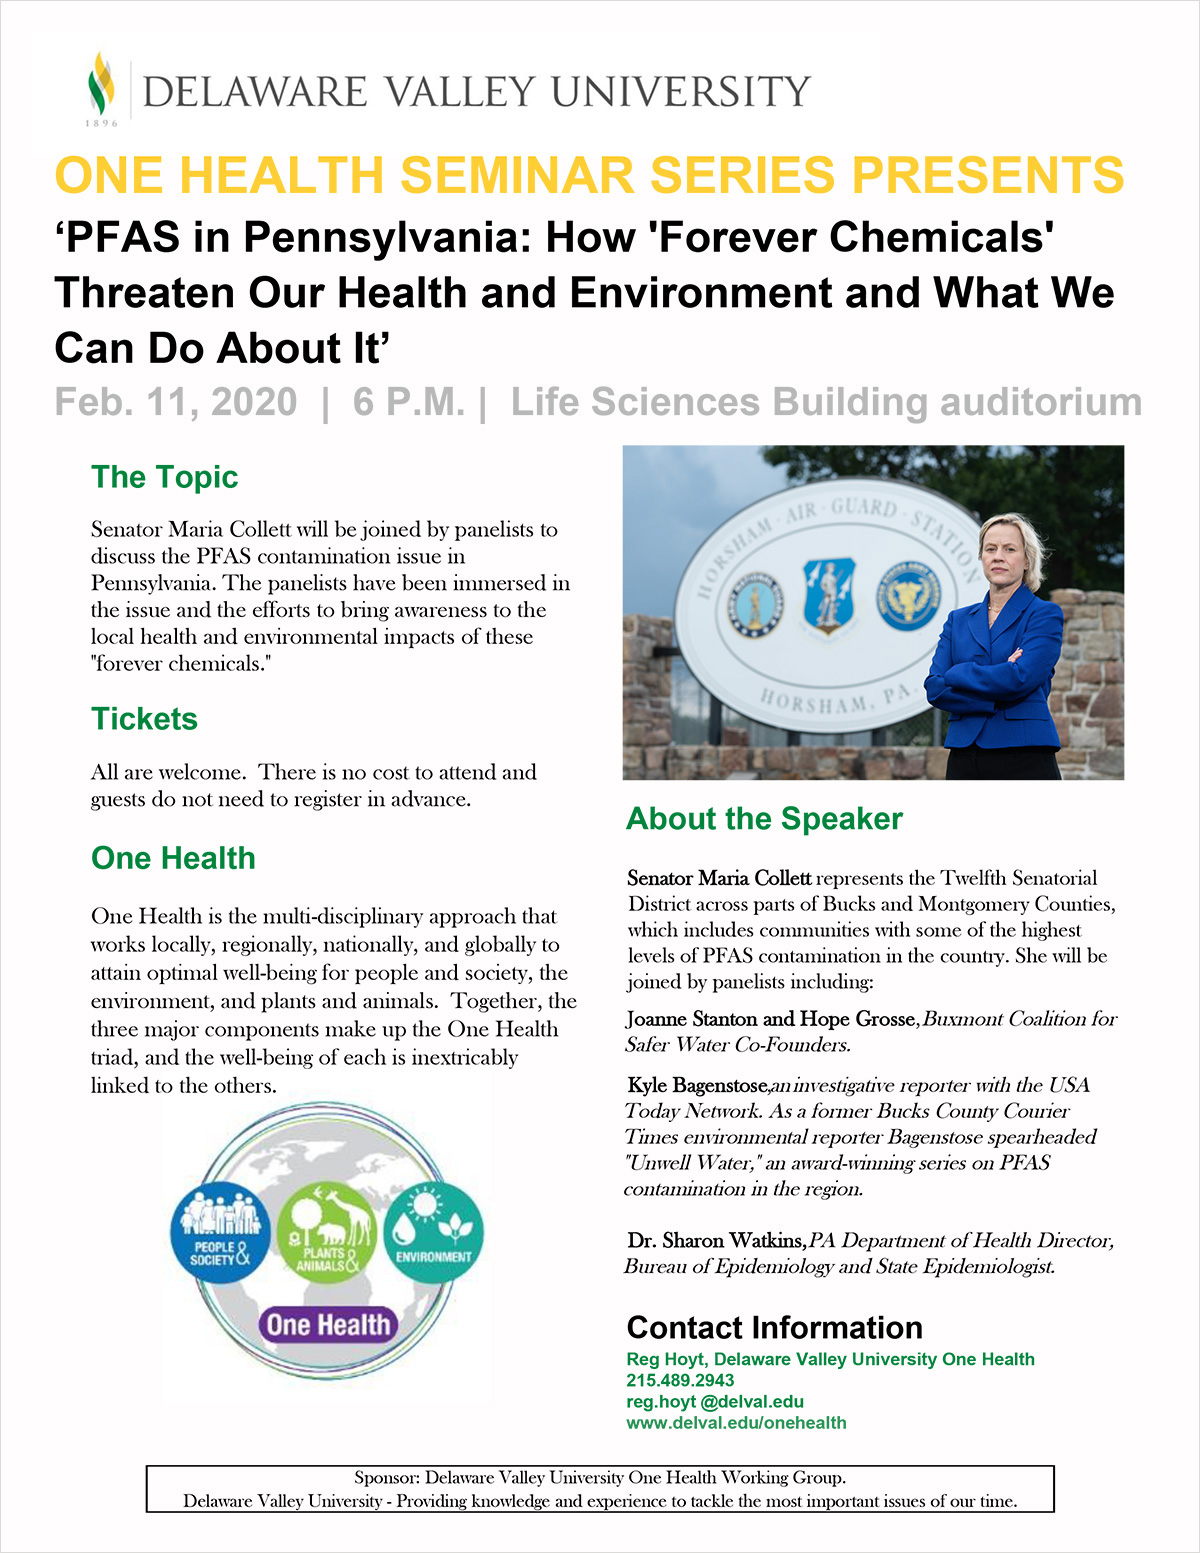 PFAS in Pennsylvania Panel